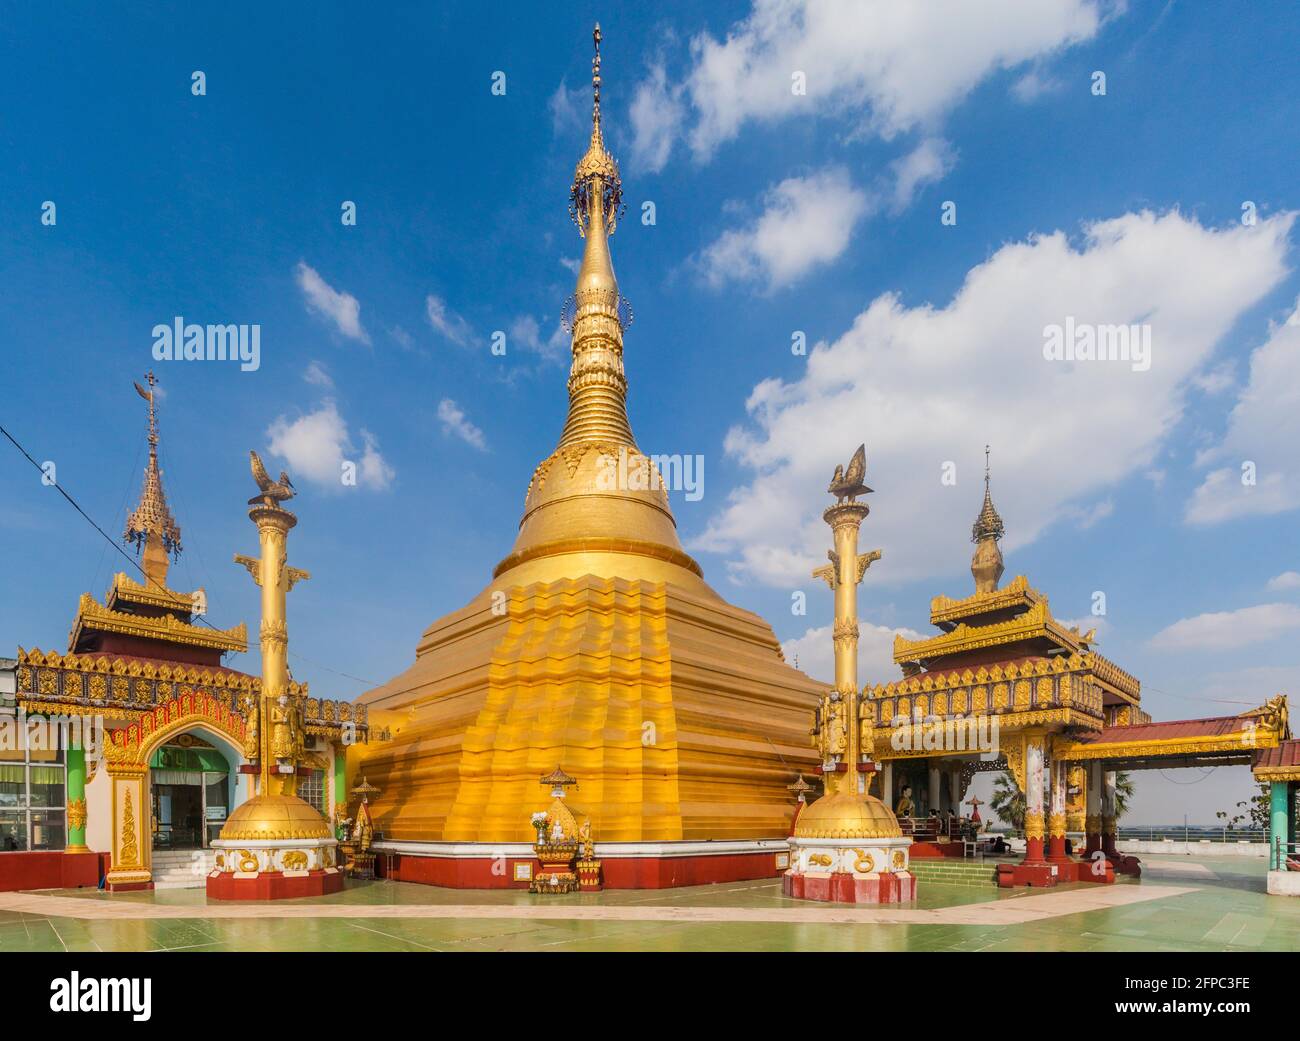 Shwe Taung Yoe Pagoda in Bago, Myanmar Stock Photo